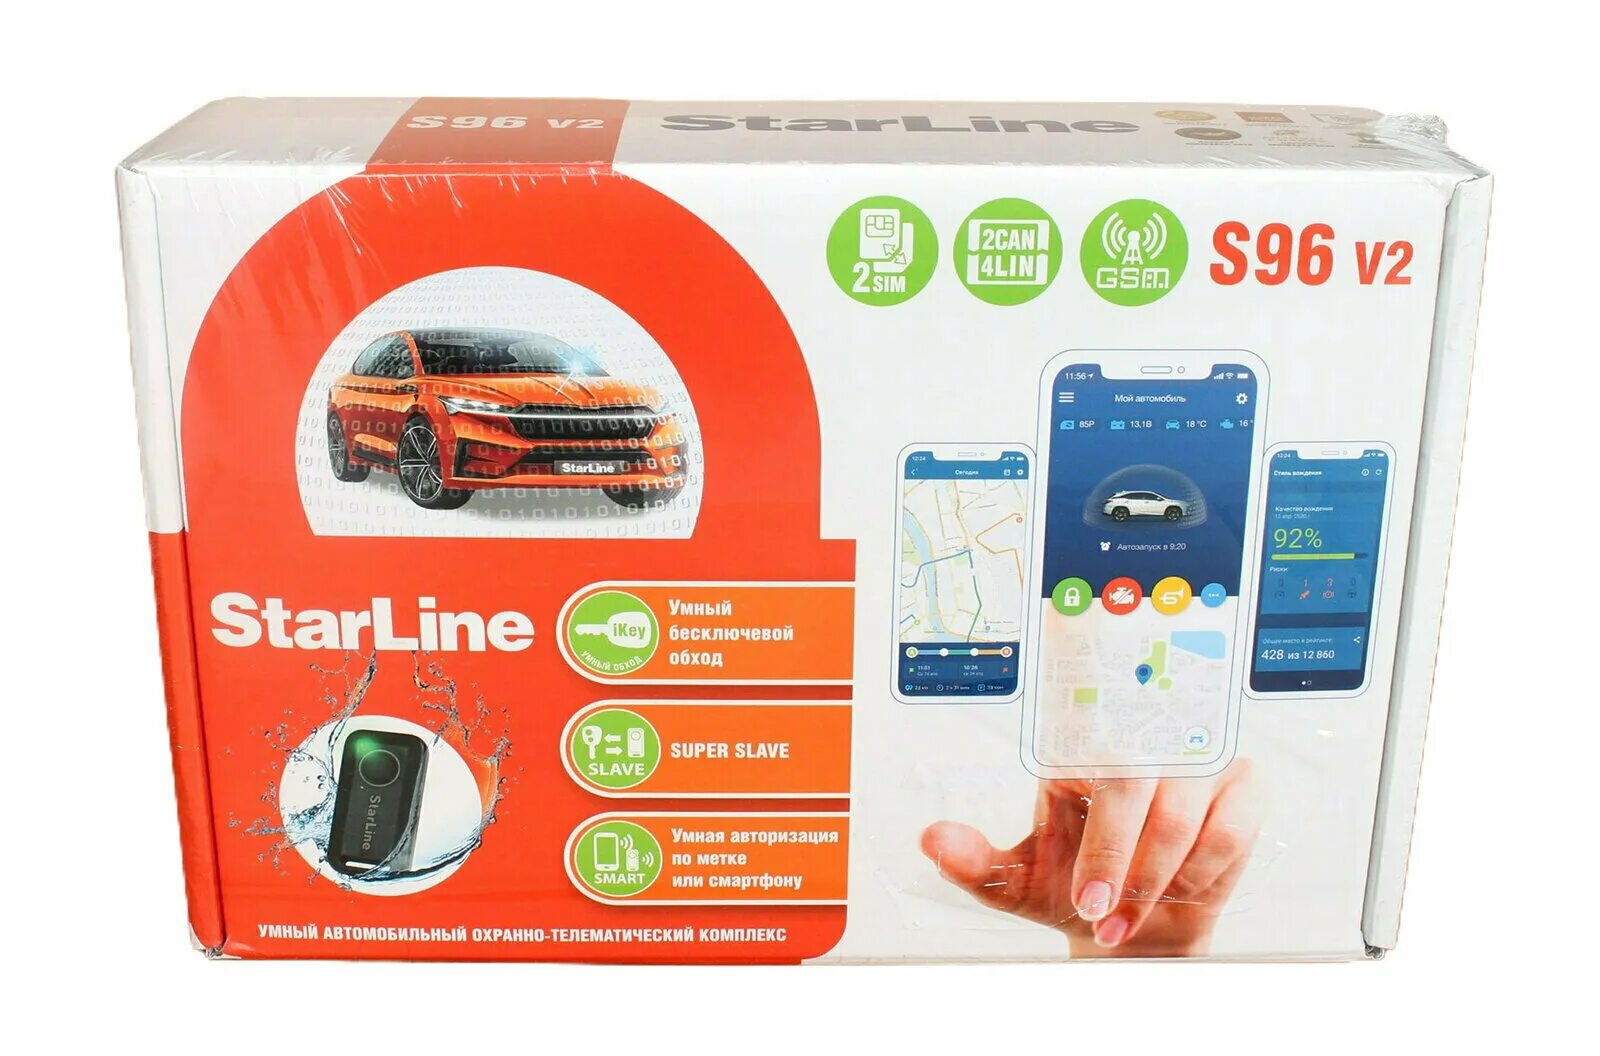 Starline 2can 2lin gsm. STARLINE С IKEY s96. S96 2can+2lin GSM. Автосигнализация STARLINE s96 v2 BT 2 can-4lin GSM. Автосигнализация старлайн s96 v2 BT 2 can + 4 Lin GSM - GPS.